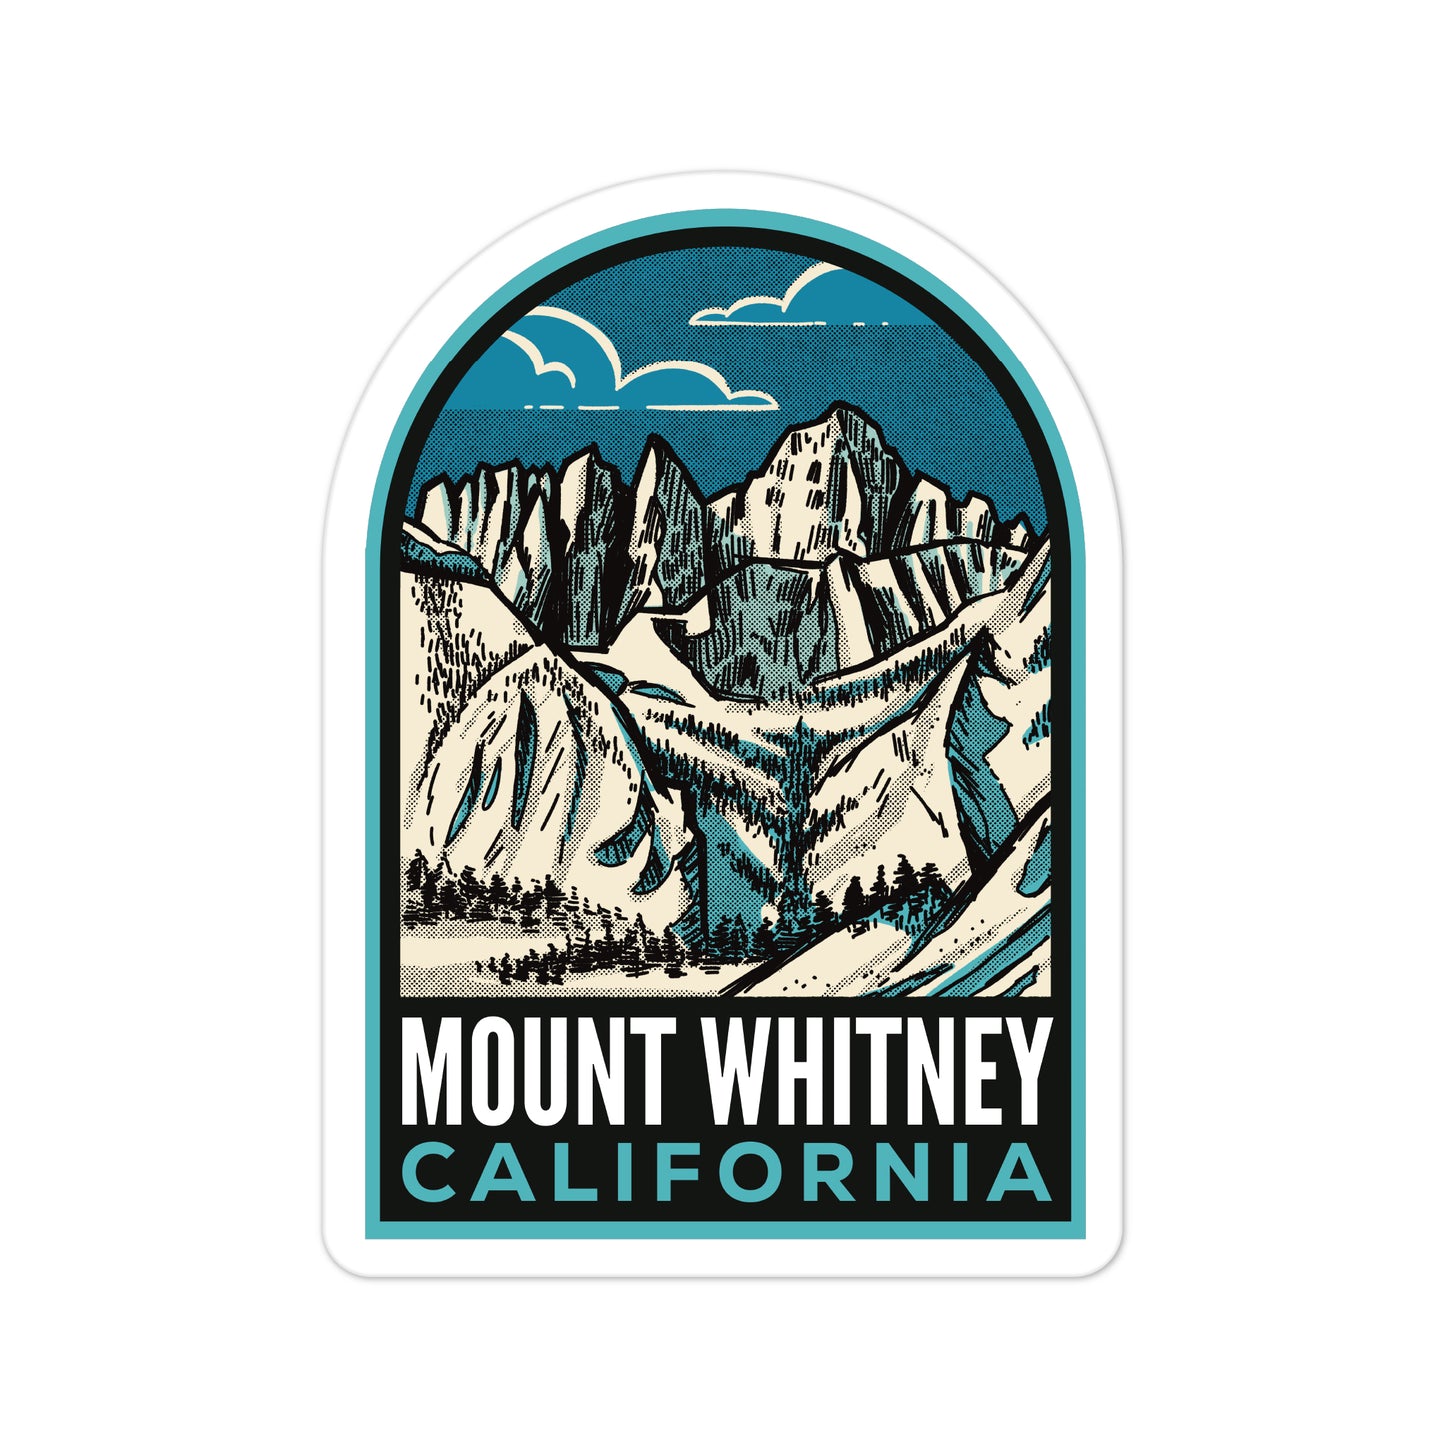 A sticker of Mount Whitney, California